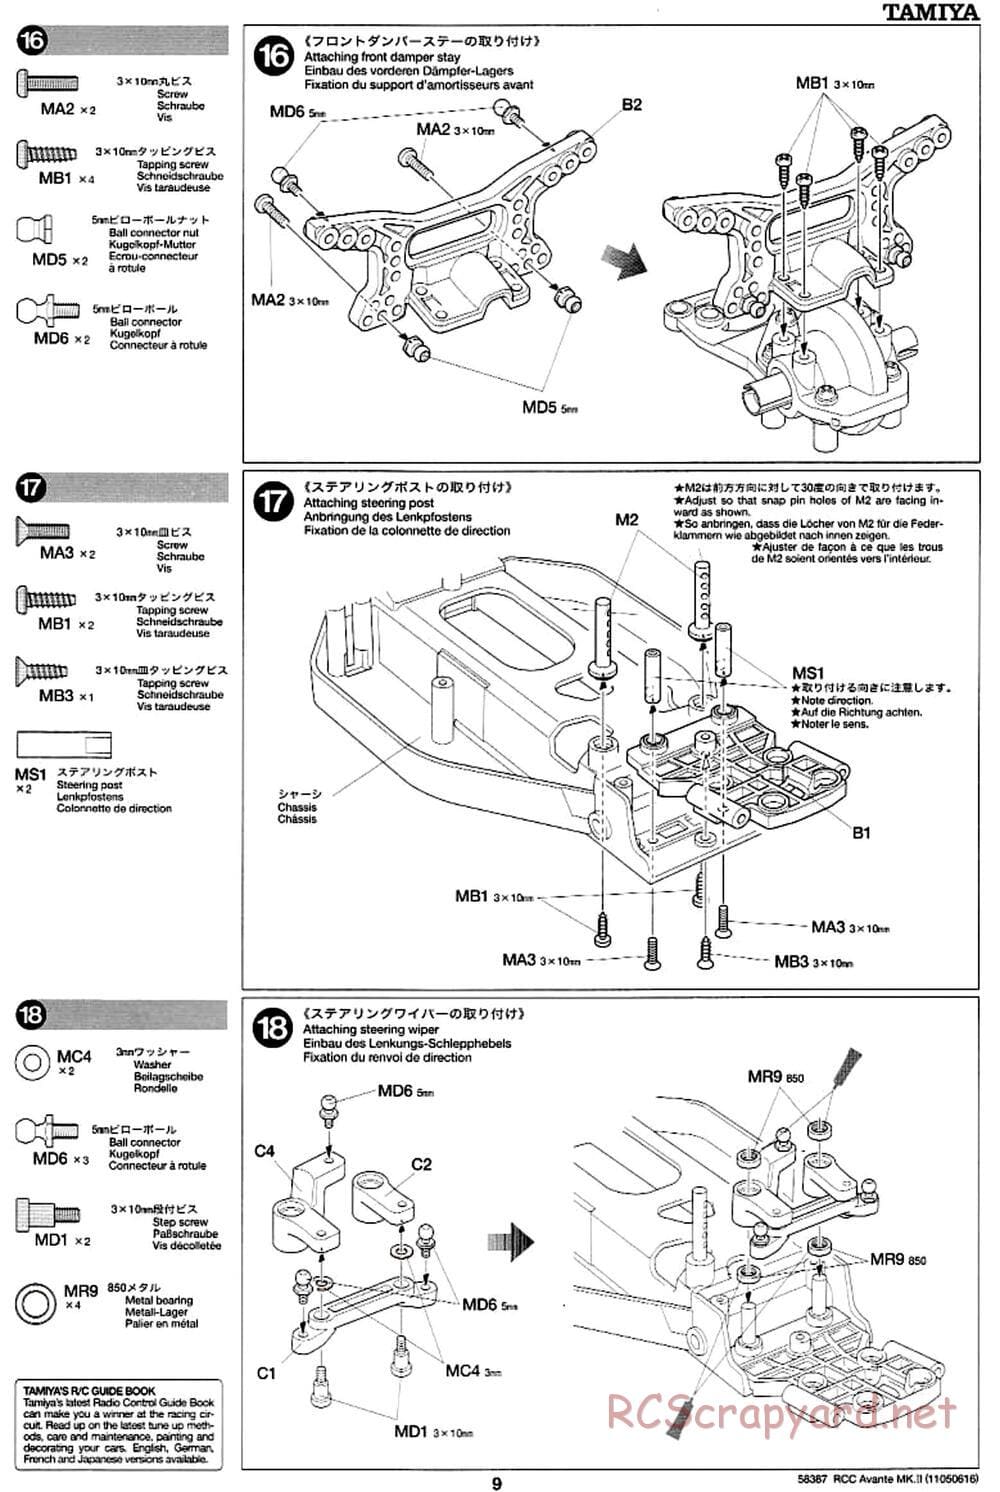 Tamiya - Avante Mk.II Chassis - Manual - Page 9